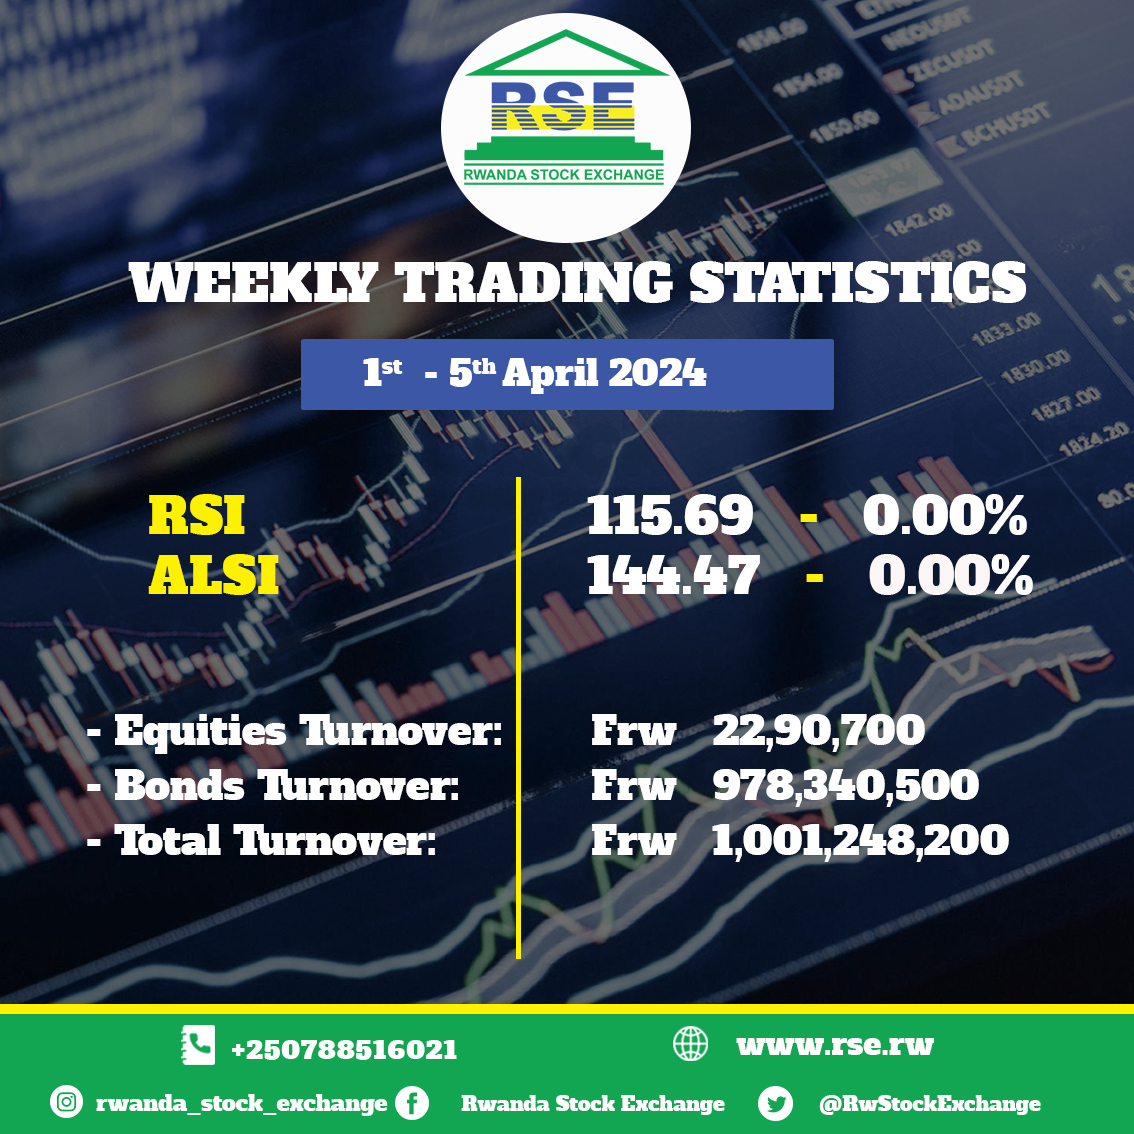 Weekly Trading Statistics! #WealthAWayOfLife